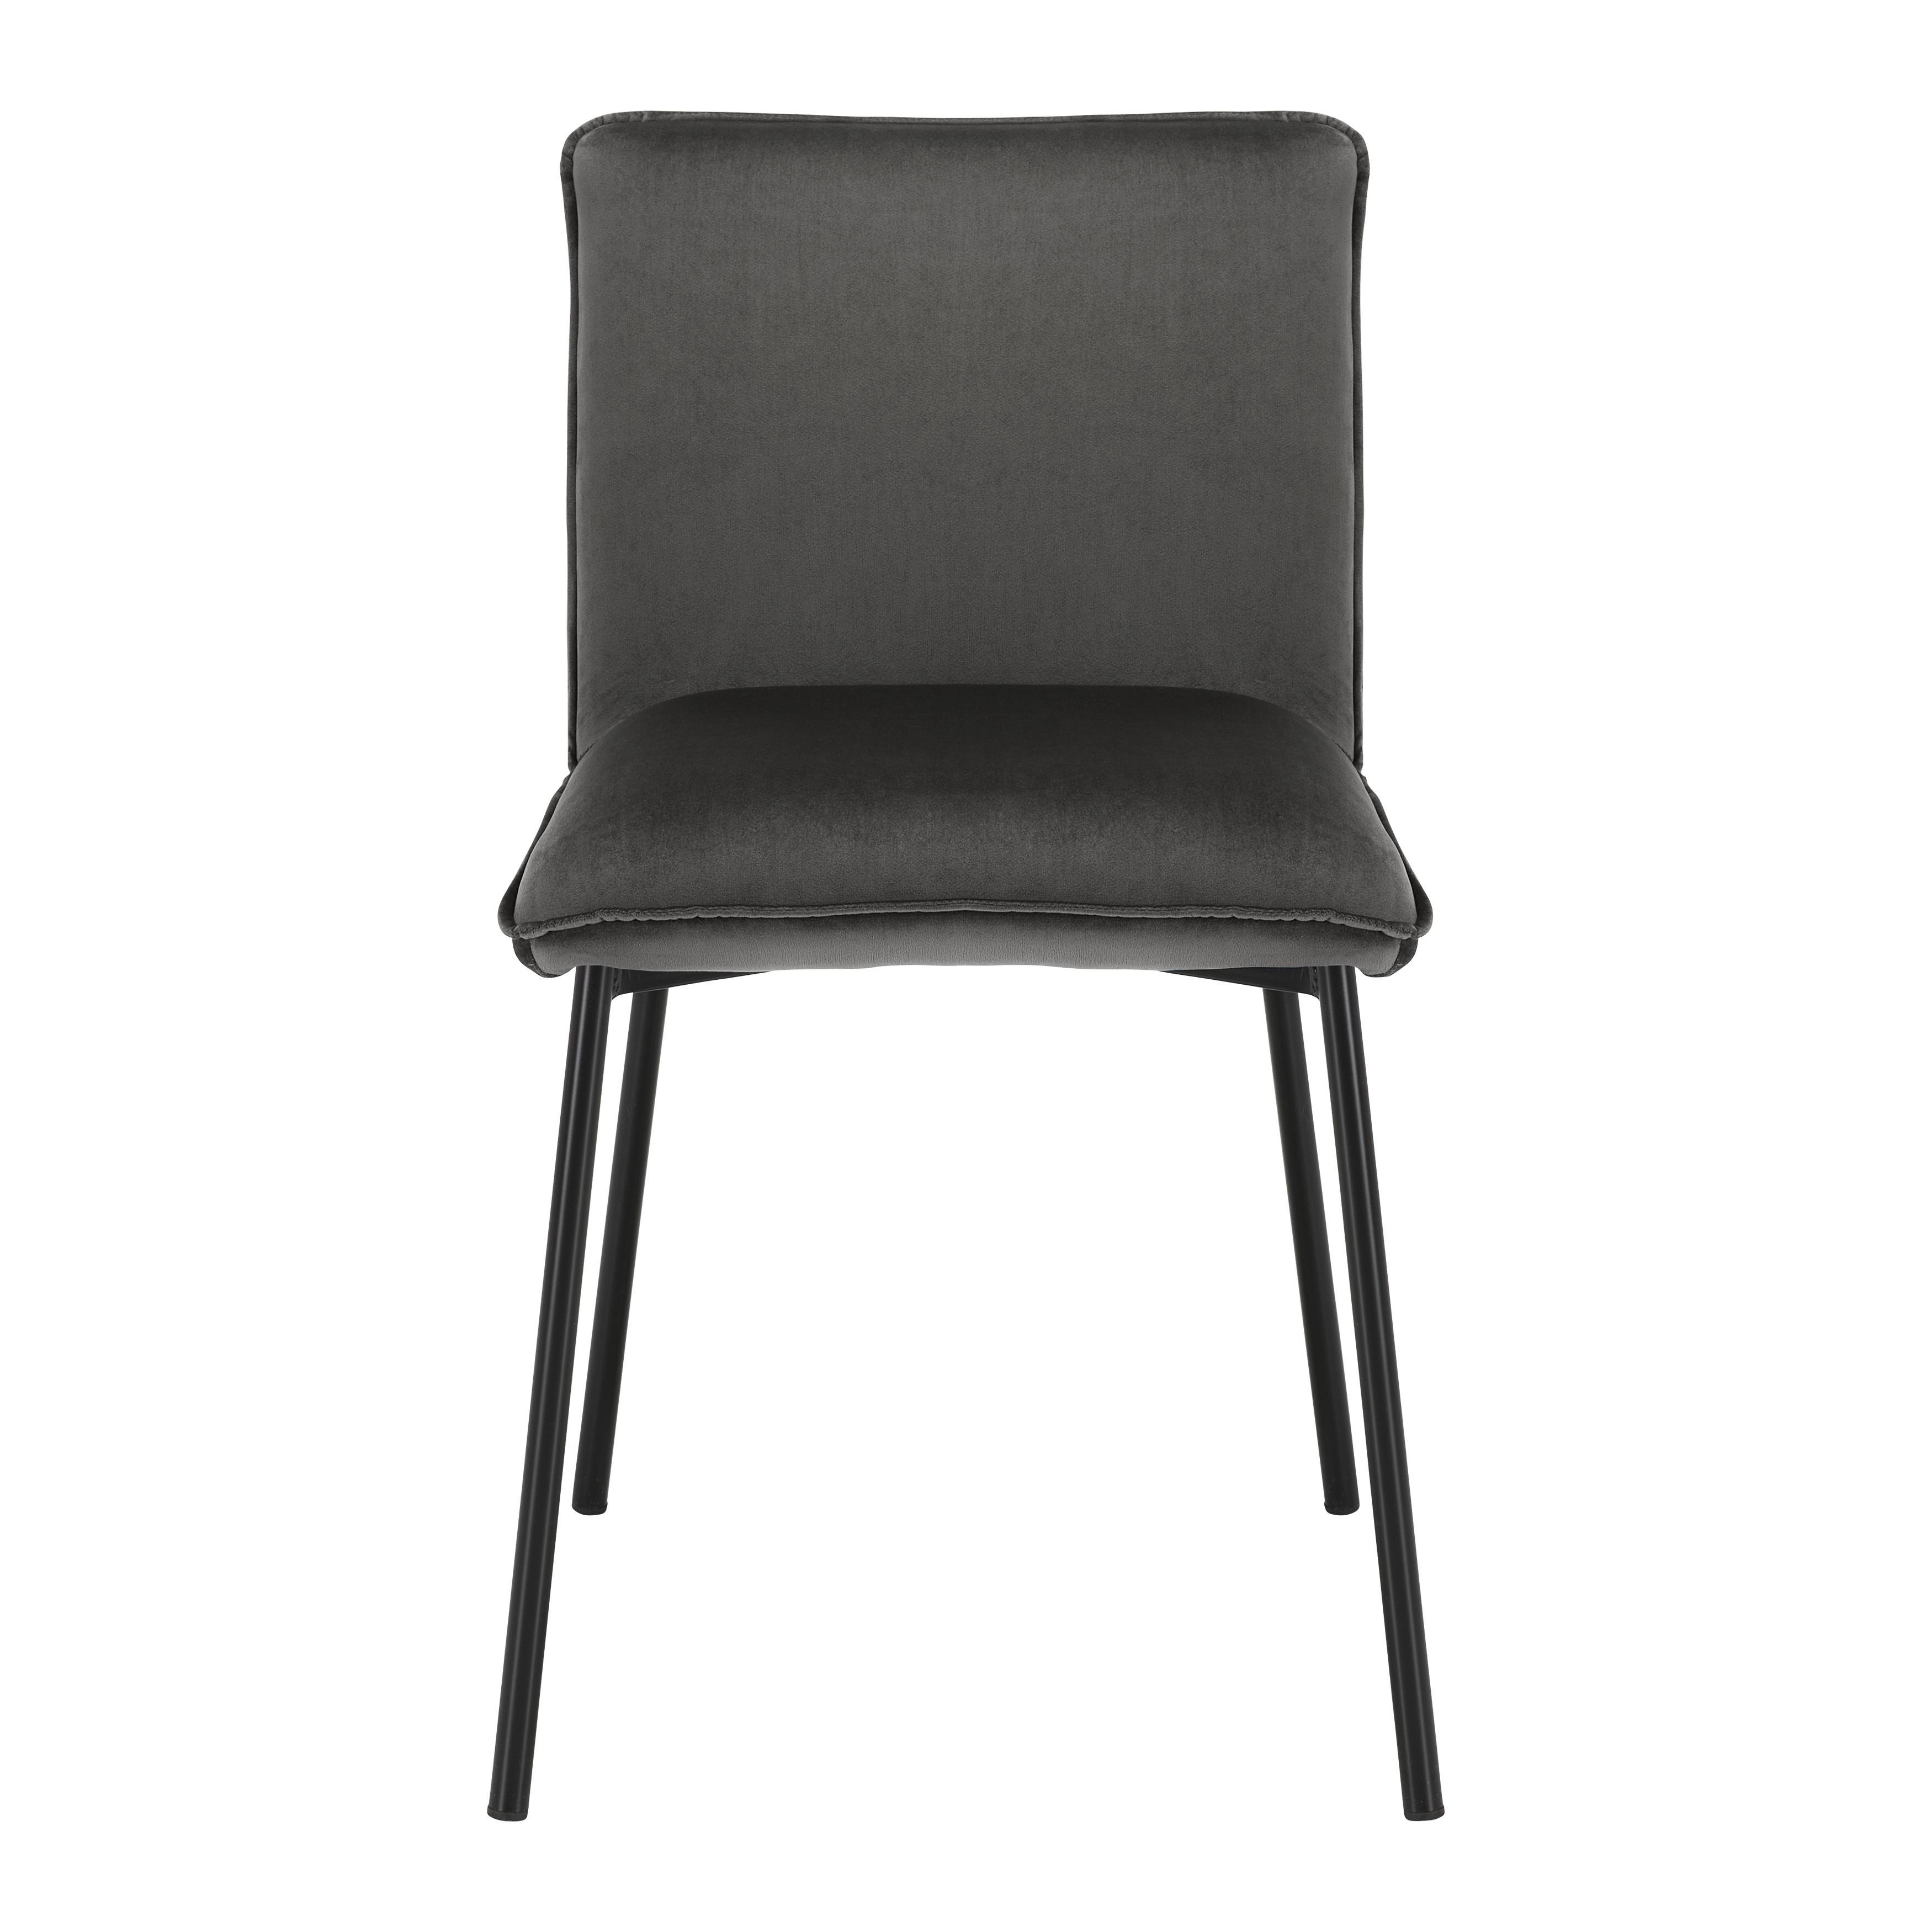 Židle Darla Tmavěšedá - černá/tmavě šedá, Moderní, kov/dřevo (49/81/55cm) - Bessagi Home